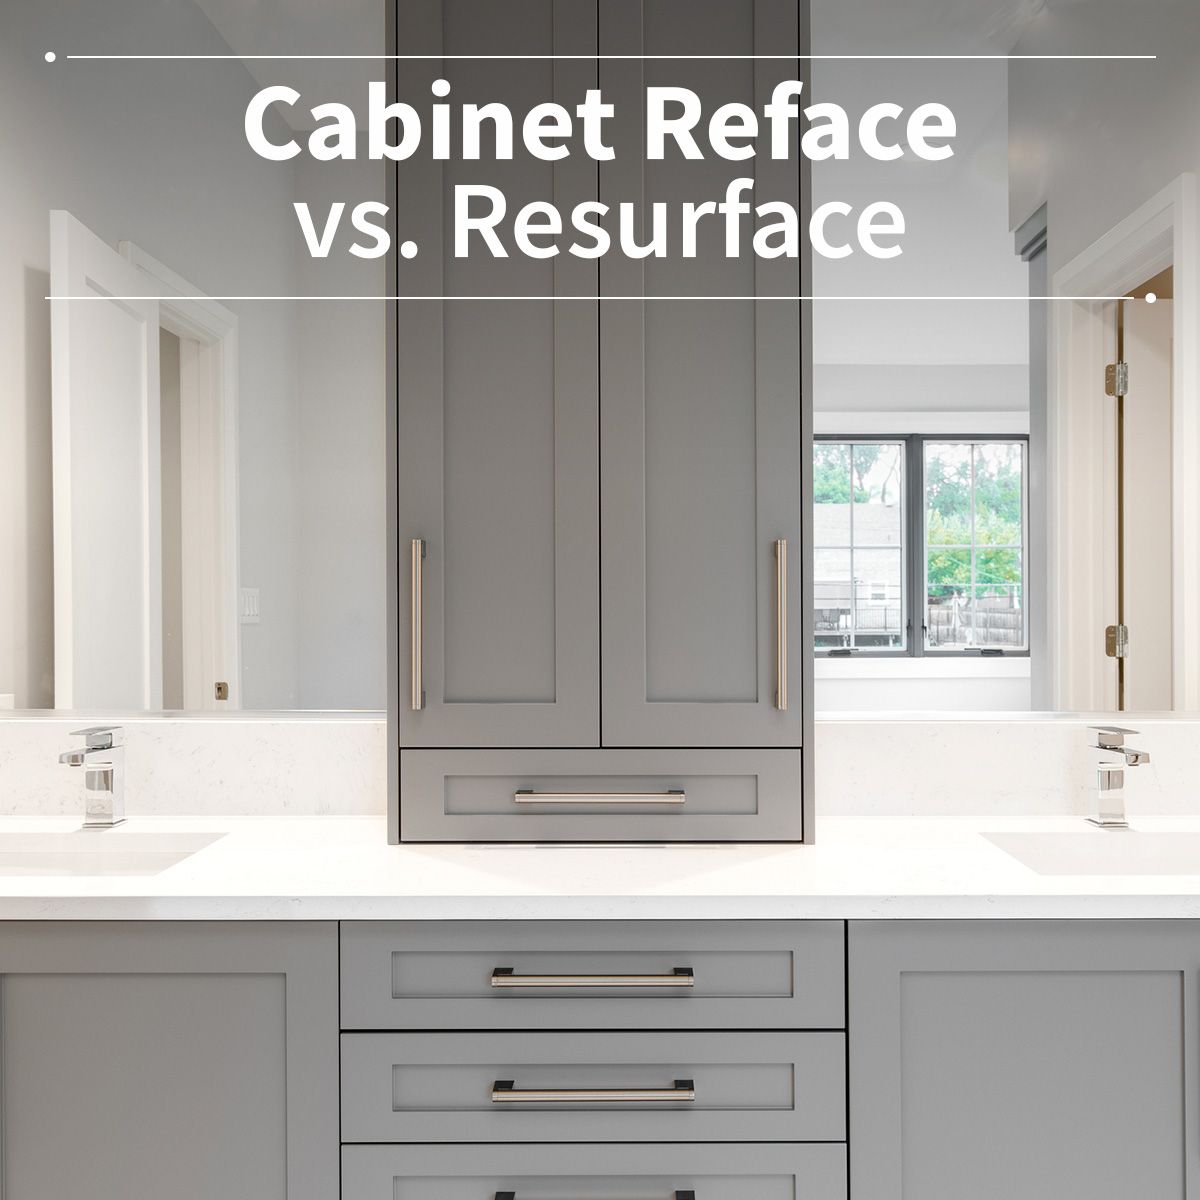 Cabinet Reface vs. Resurface